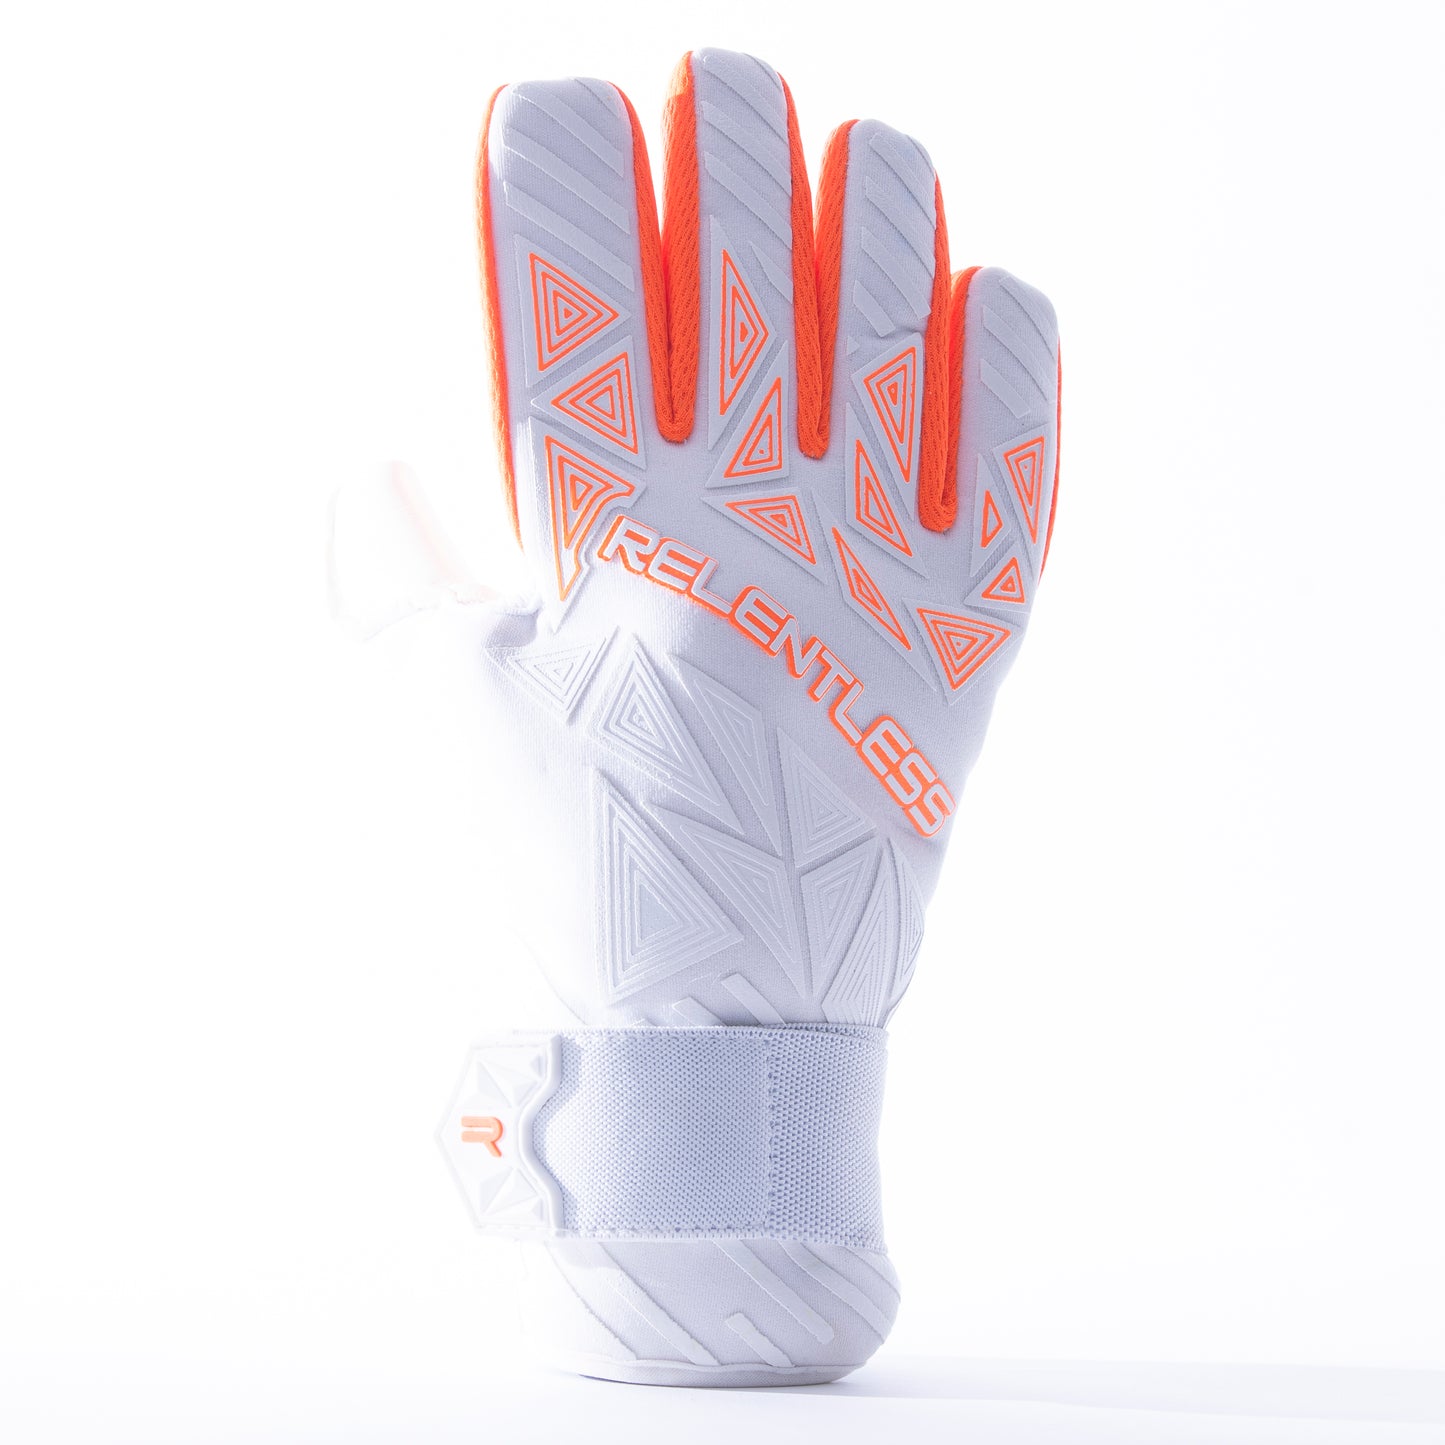 White and neon orange goalkeeper glove